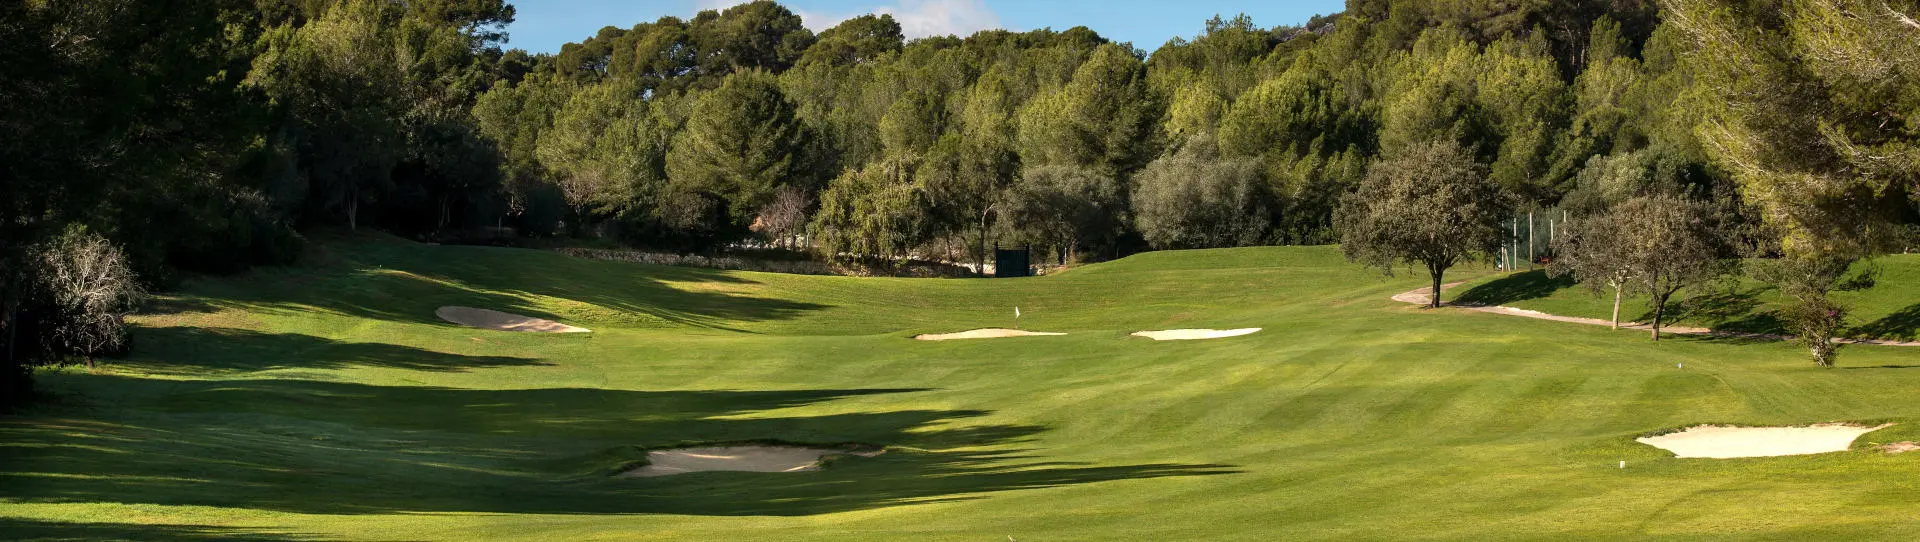 Spain golf courses - Real Golf Bendinat - Photo 1